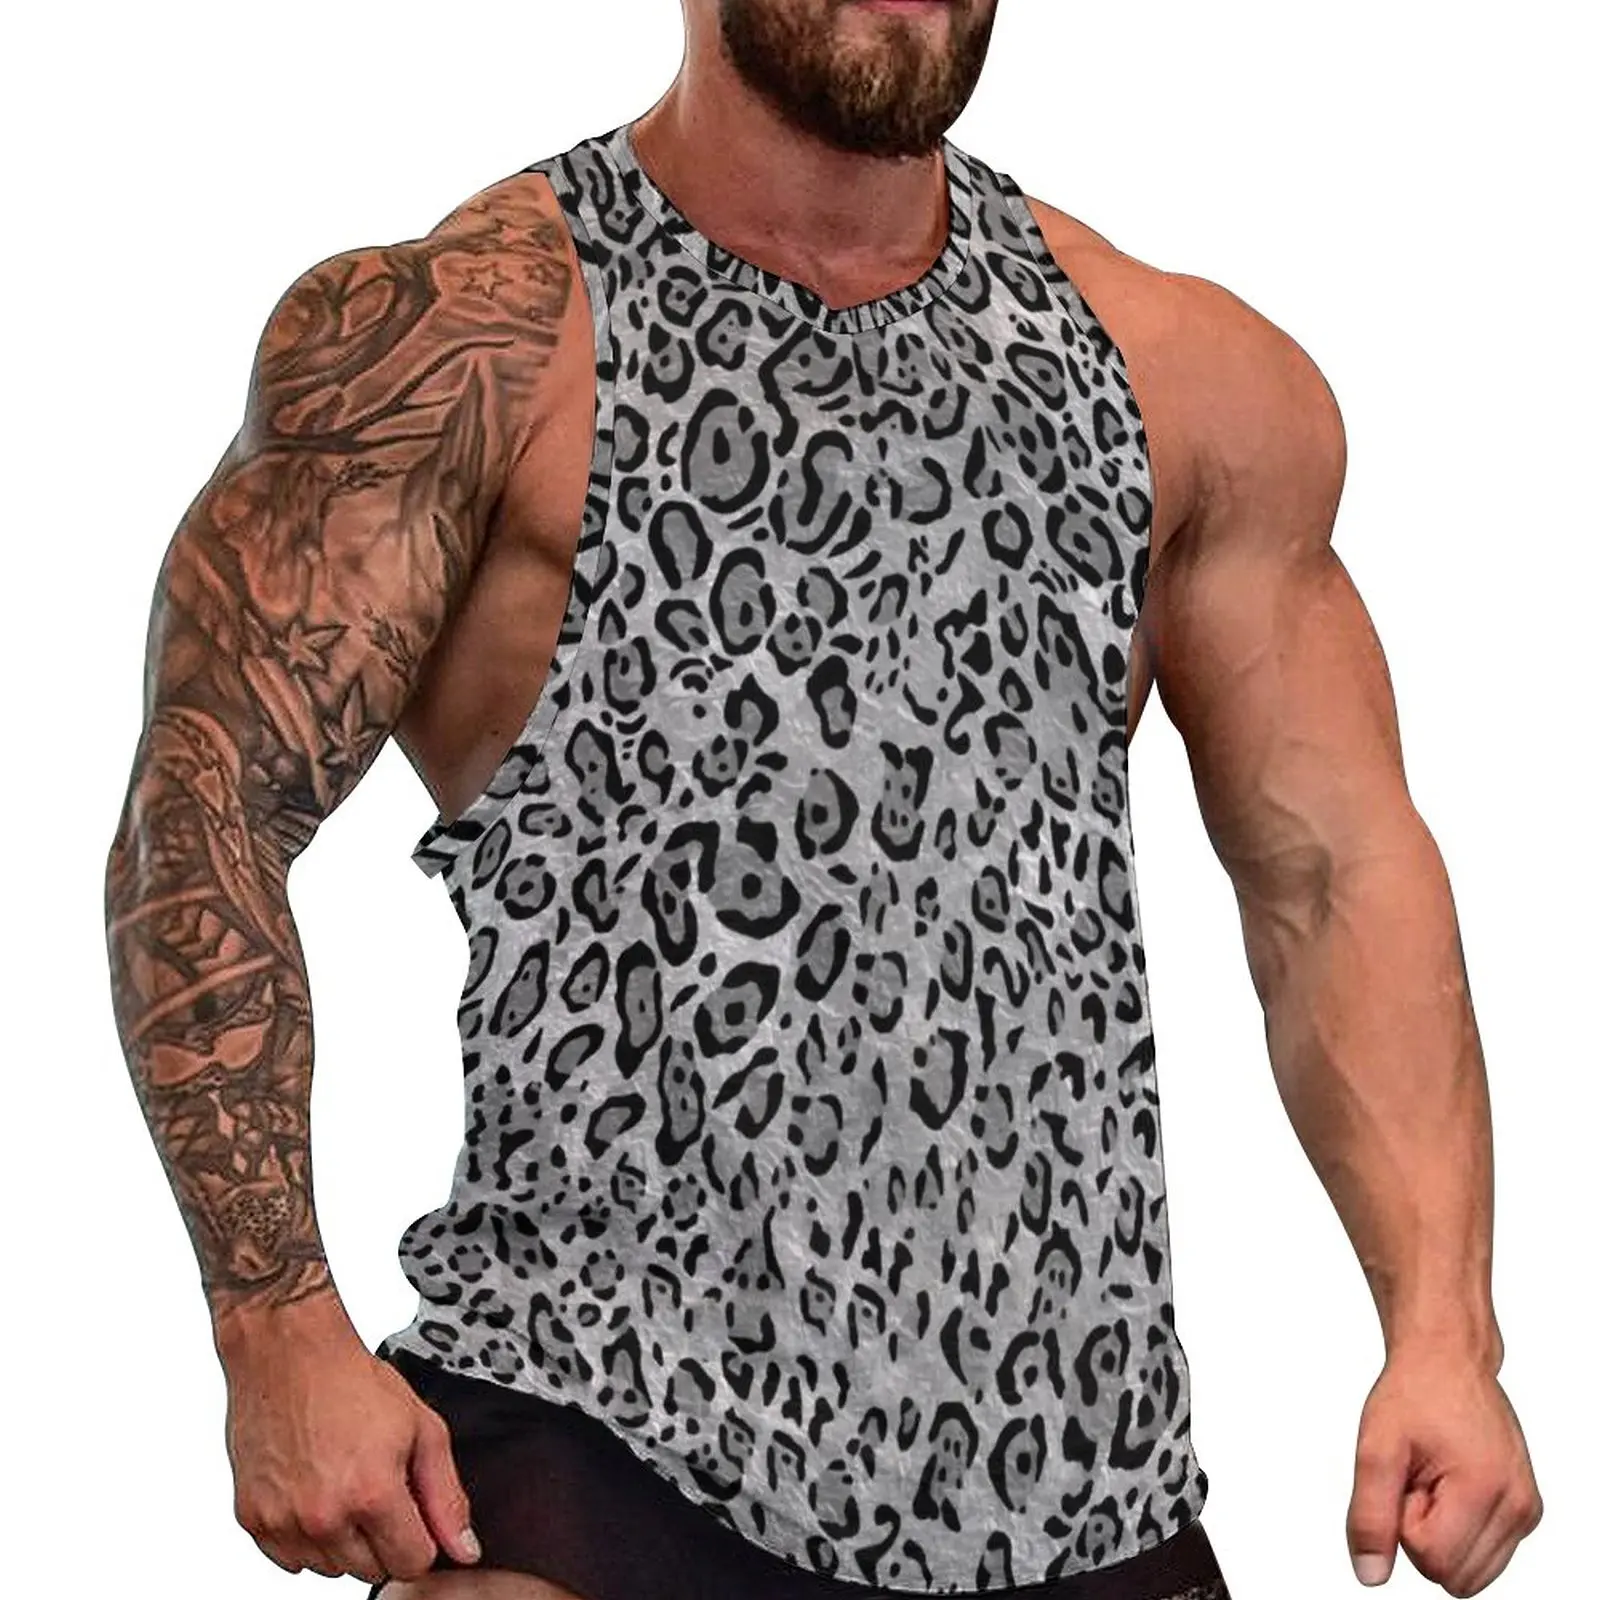 

Grey Cheetah Animal Skin Tank Top Males Stylish Monochrome Leopard Print Fashion Tops Summer Training Design Sleeveless Shirts